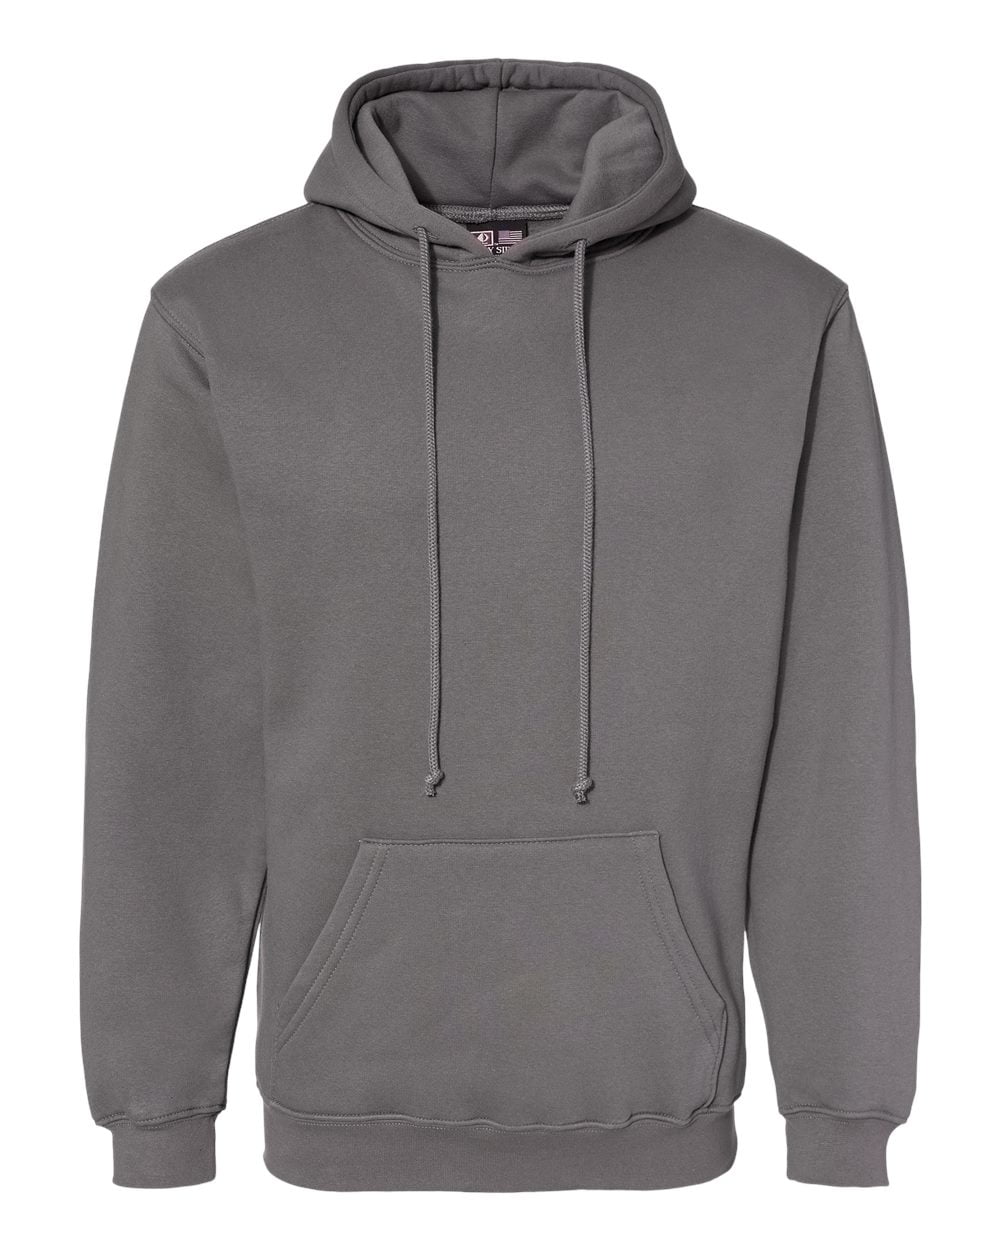 Bayside USA-Made Hooded Sweatshirt - Walmart.com